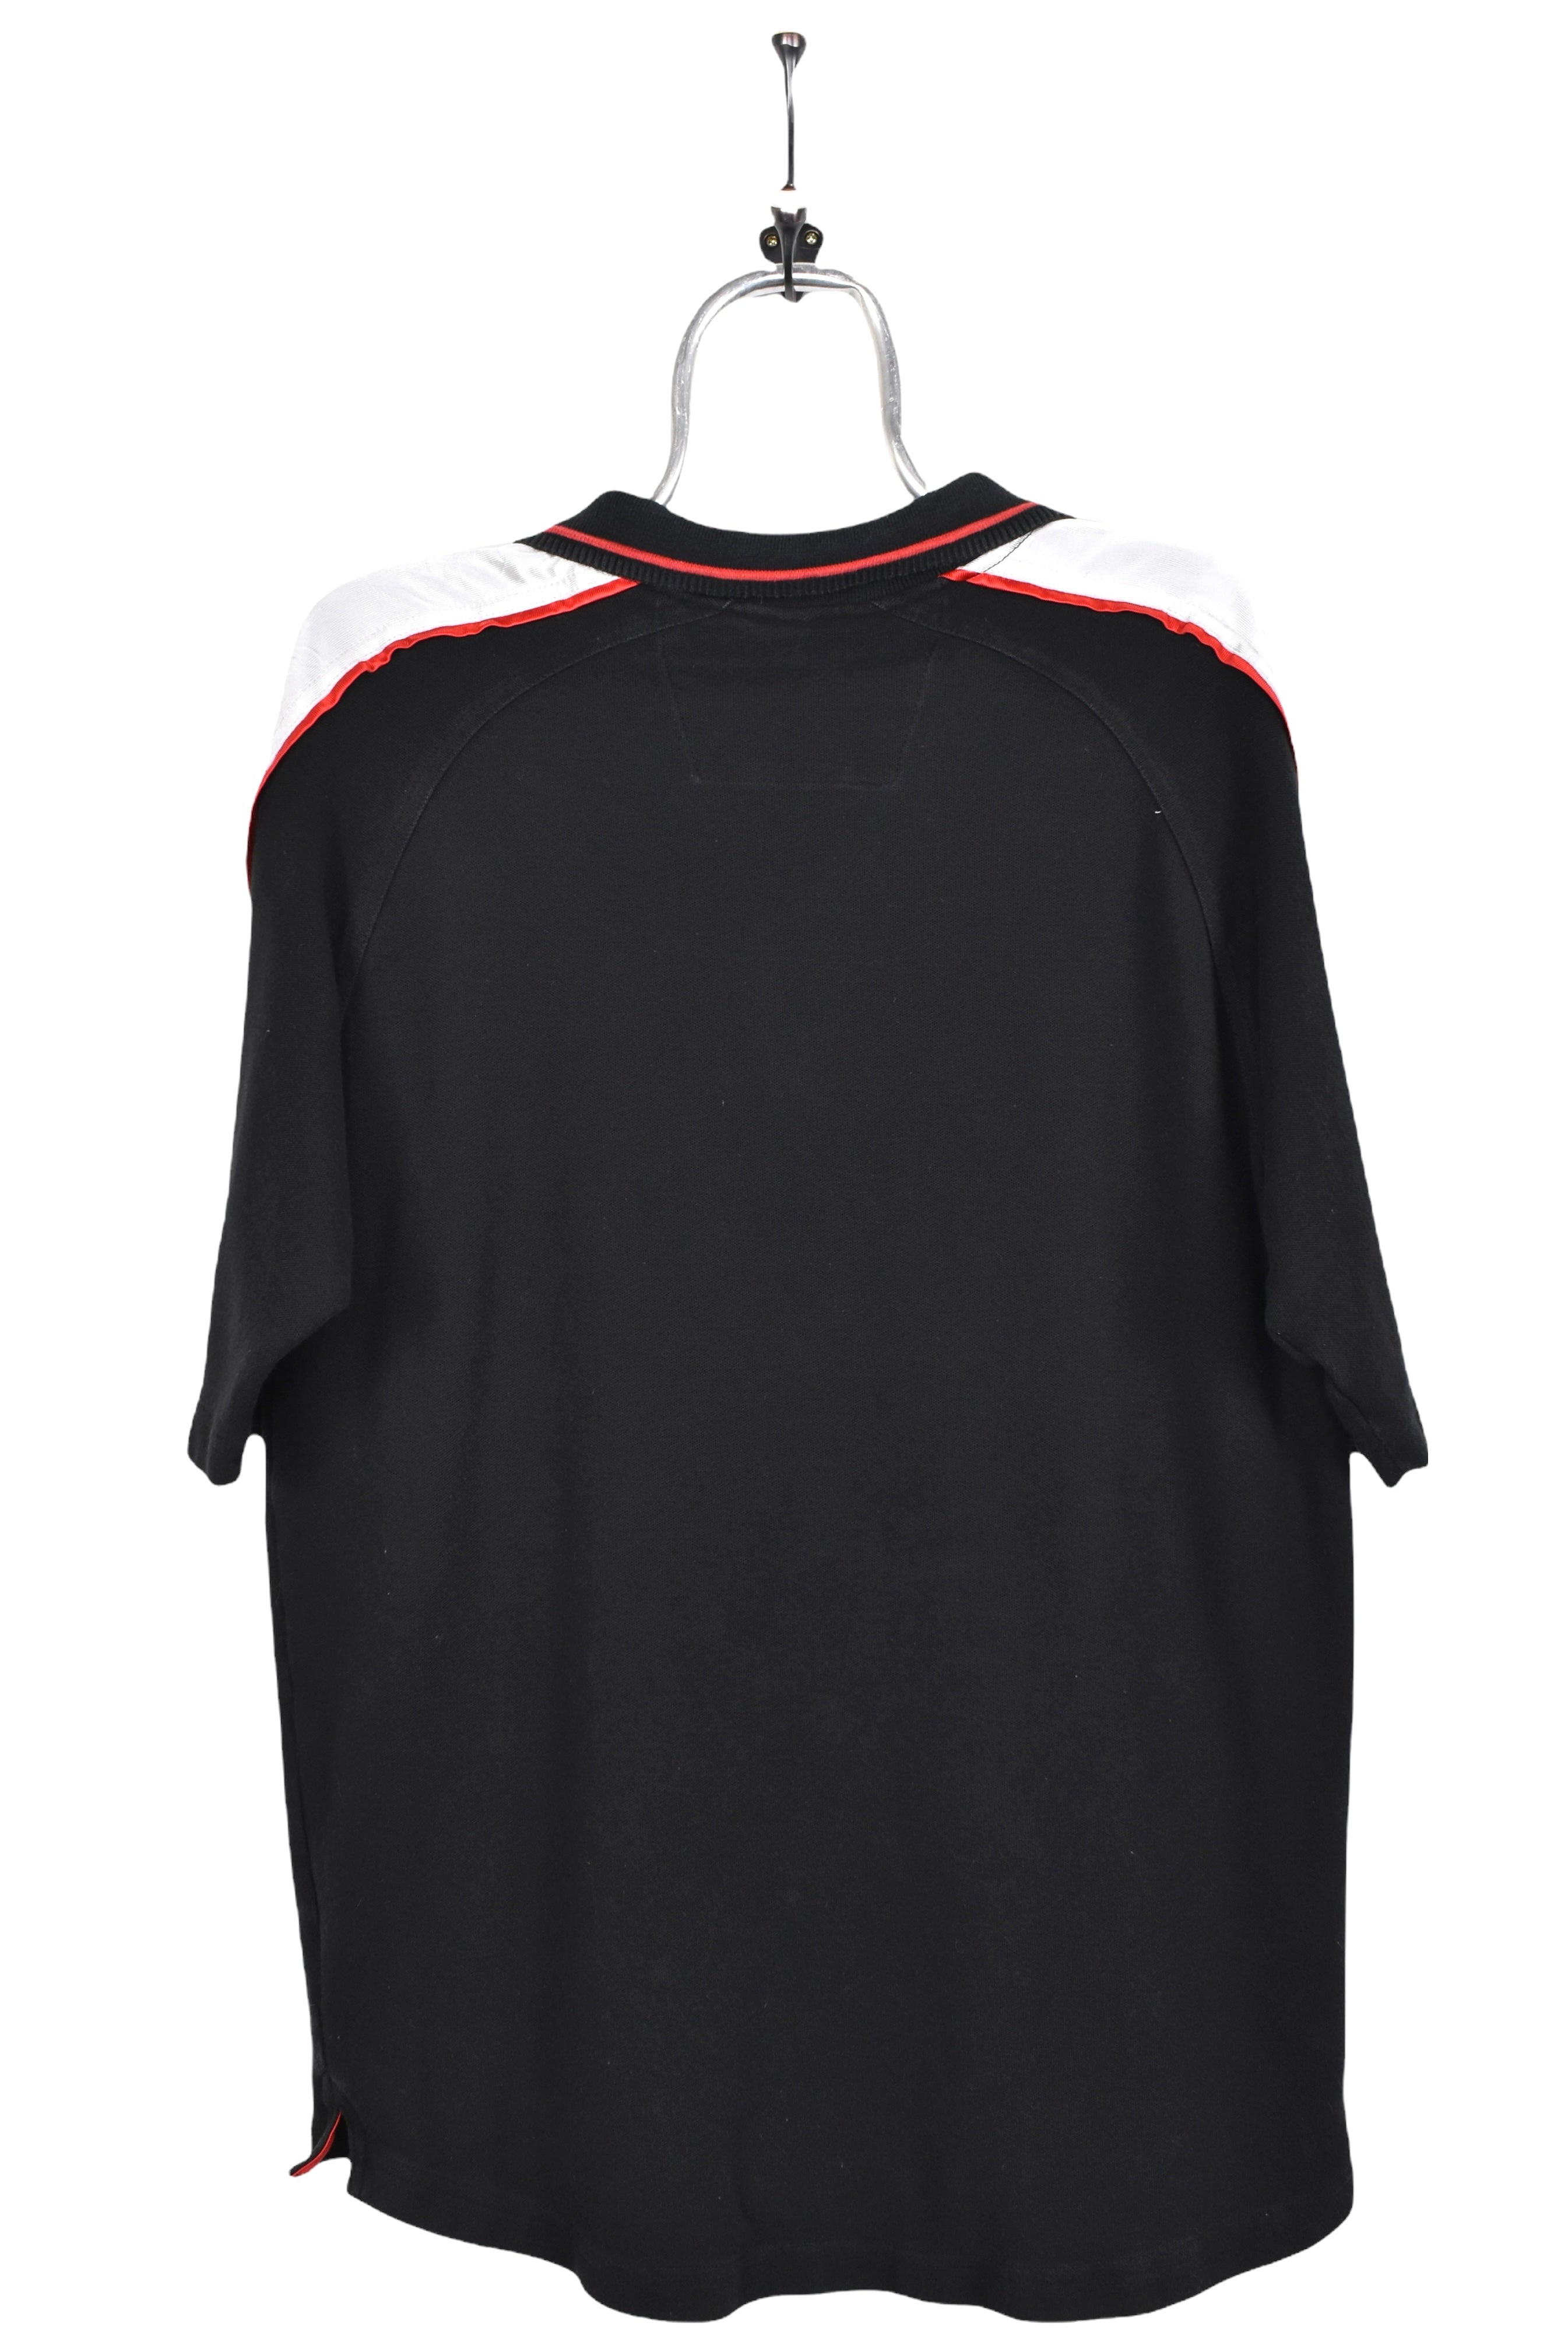 Vintage Puma polo shirt, soccer embroidered collared tee - AU M PUMA